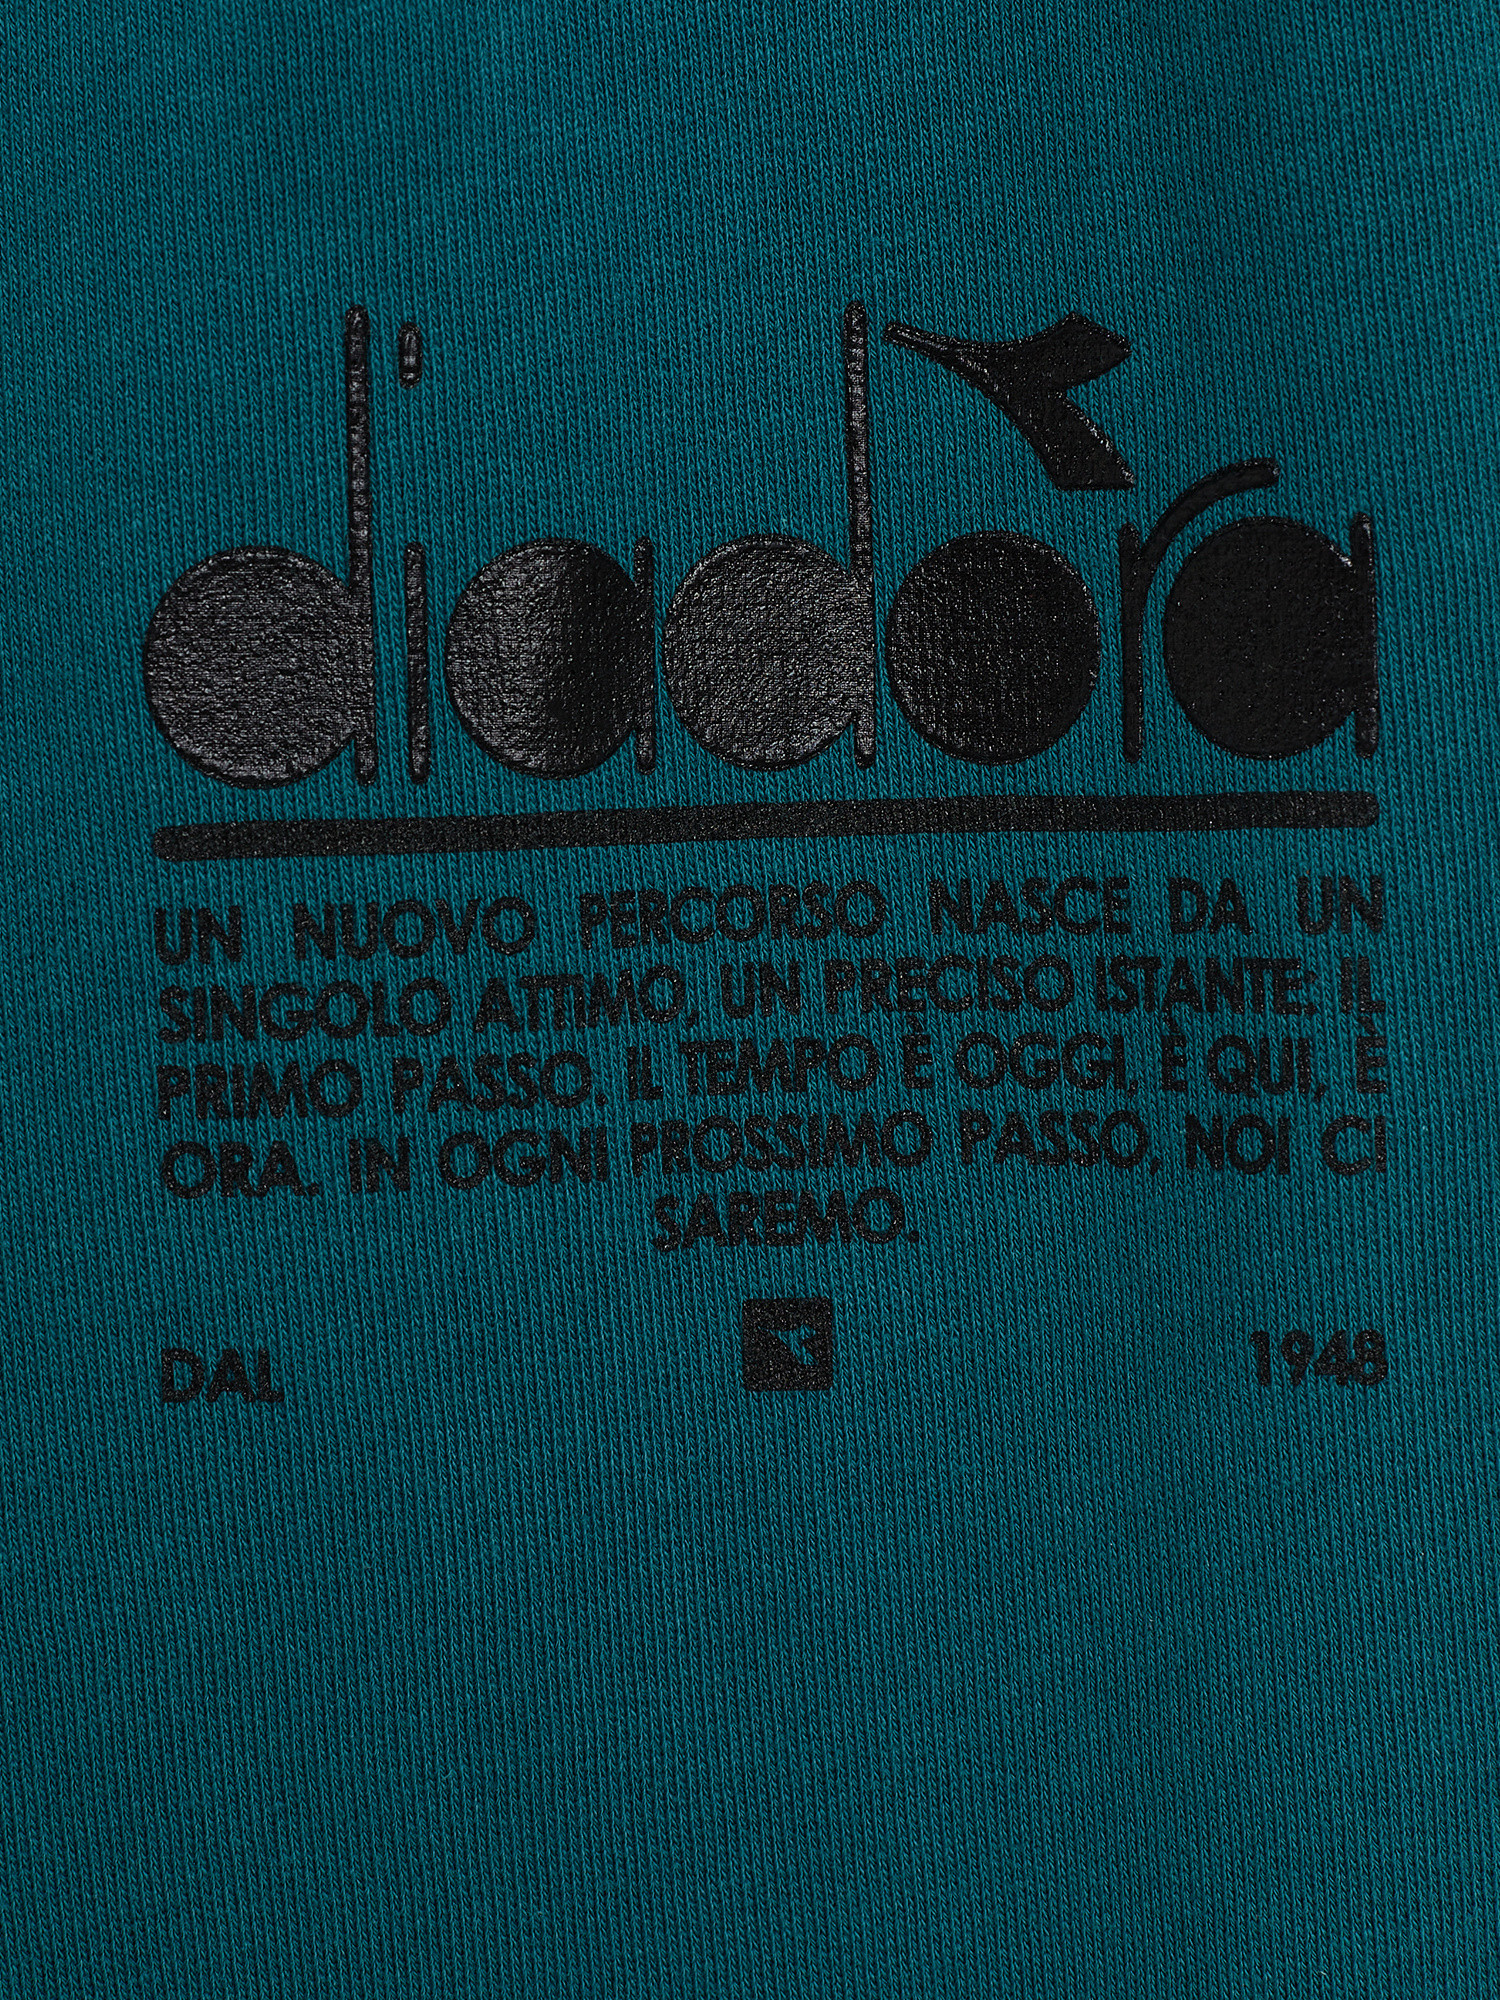 Diadora - Manifesto sports trousers with cotton print, Petroleum , large image number 1